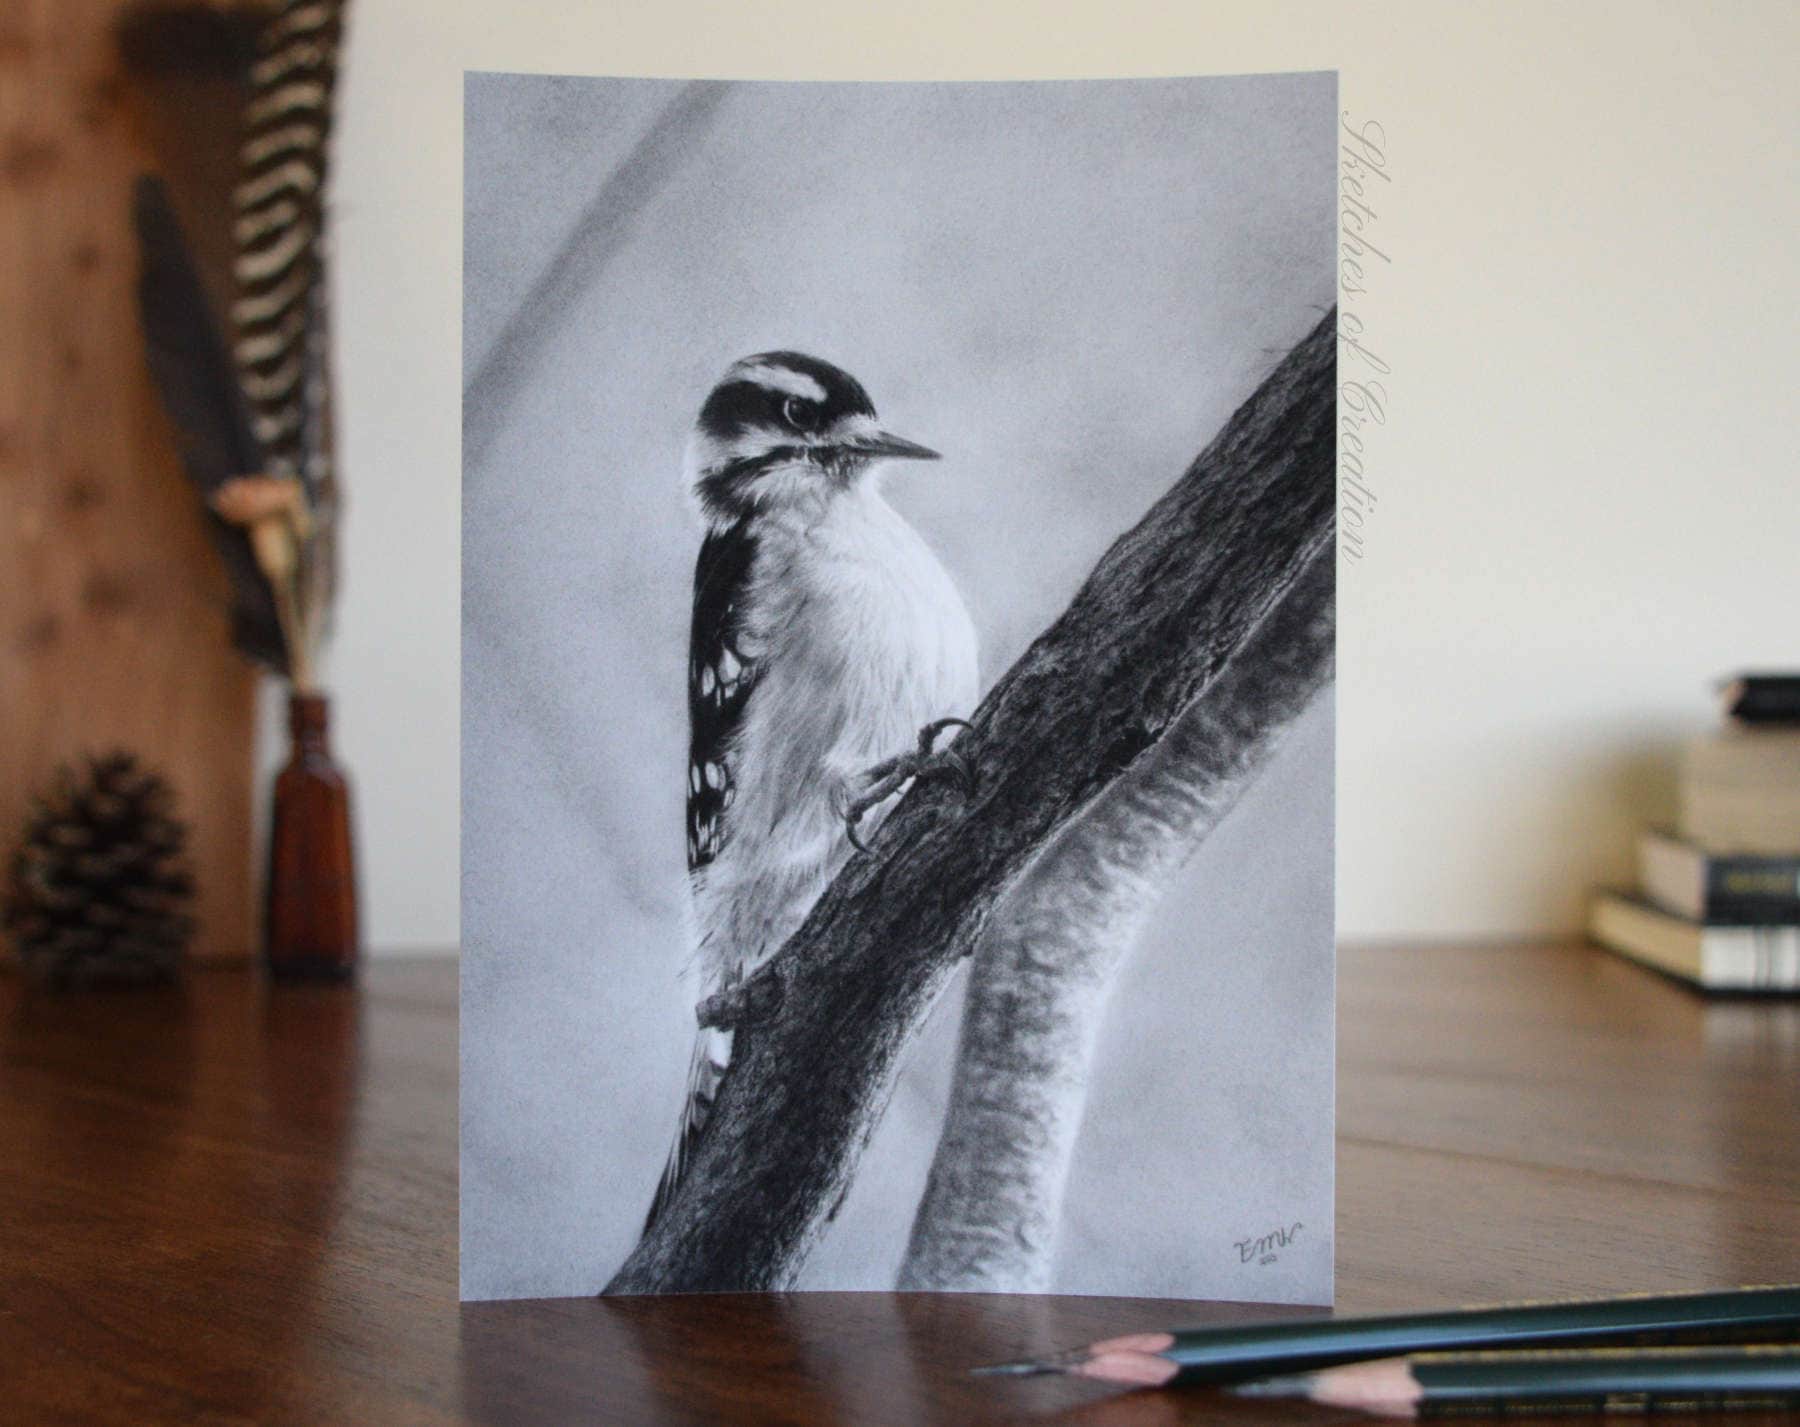 A print of a downy woodpecker